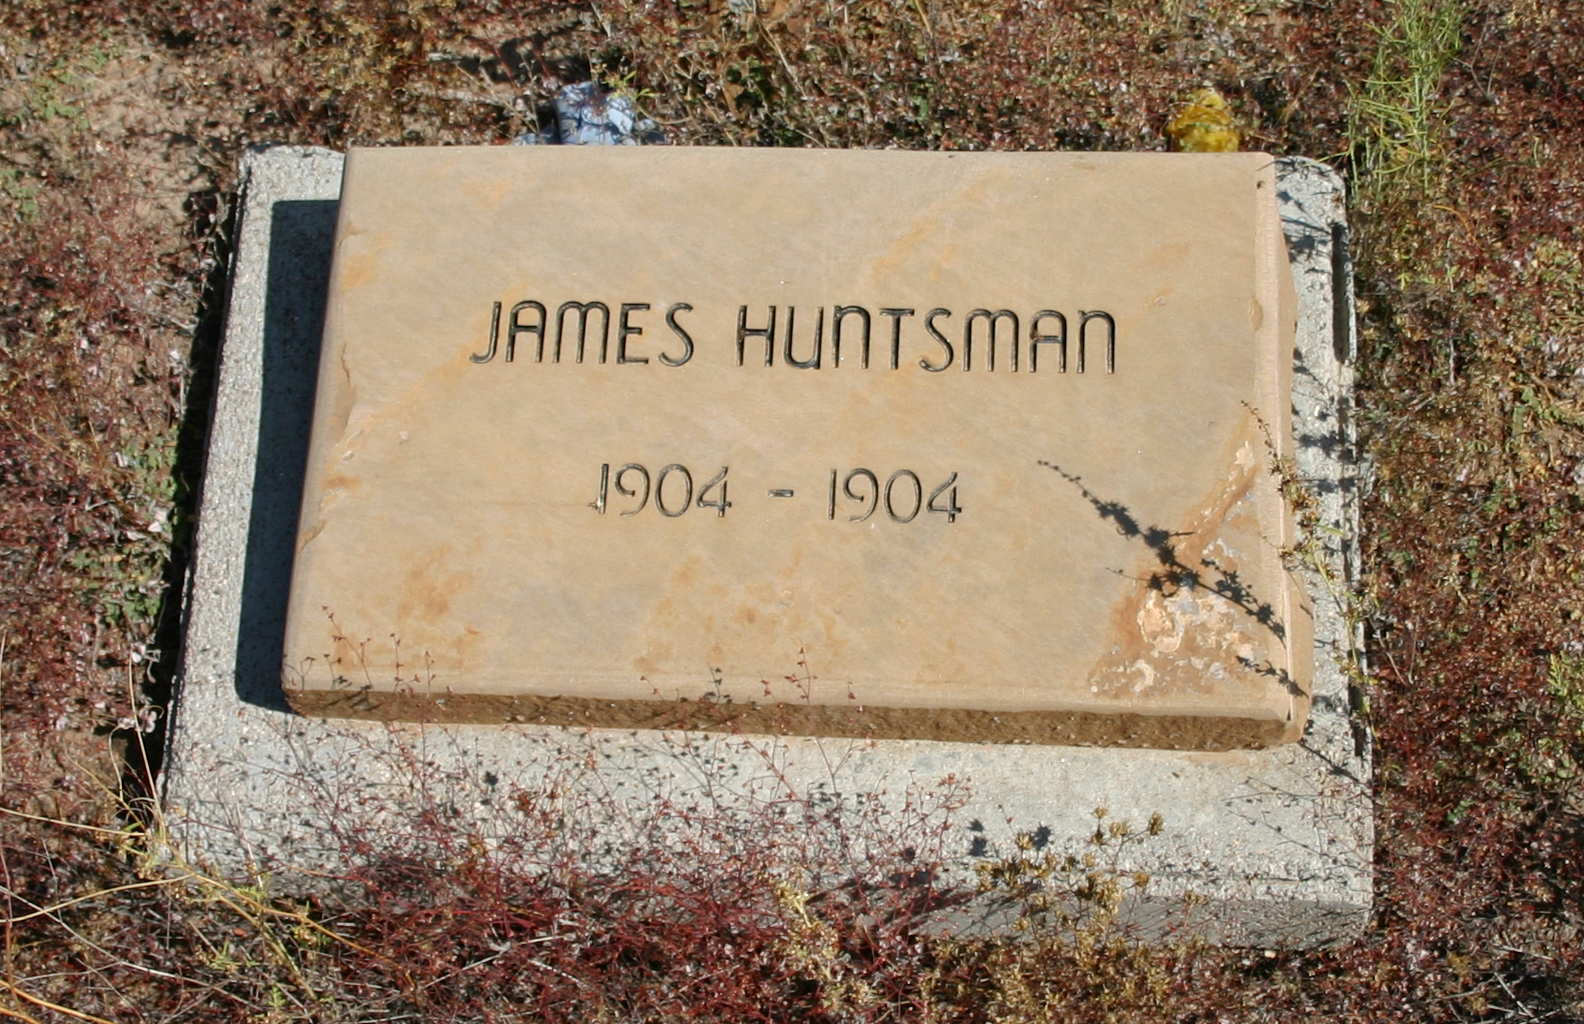 James Huntsman gravestone at the Hebron Cemetery